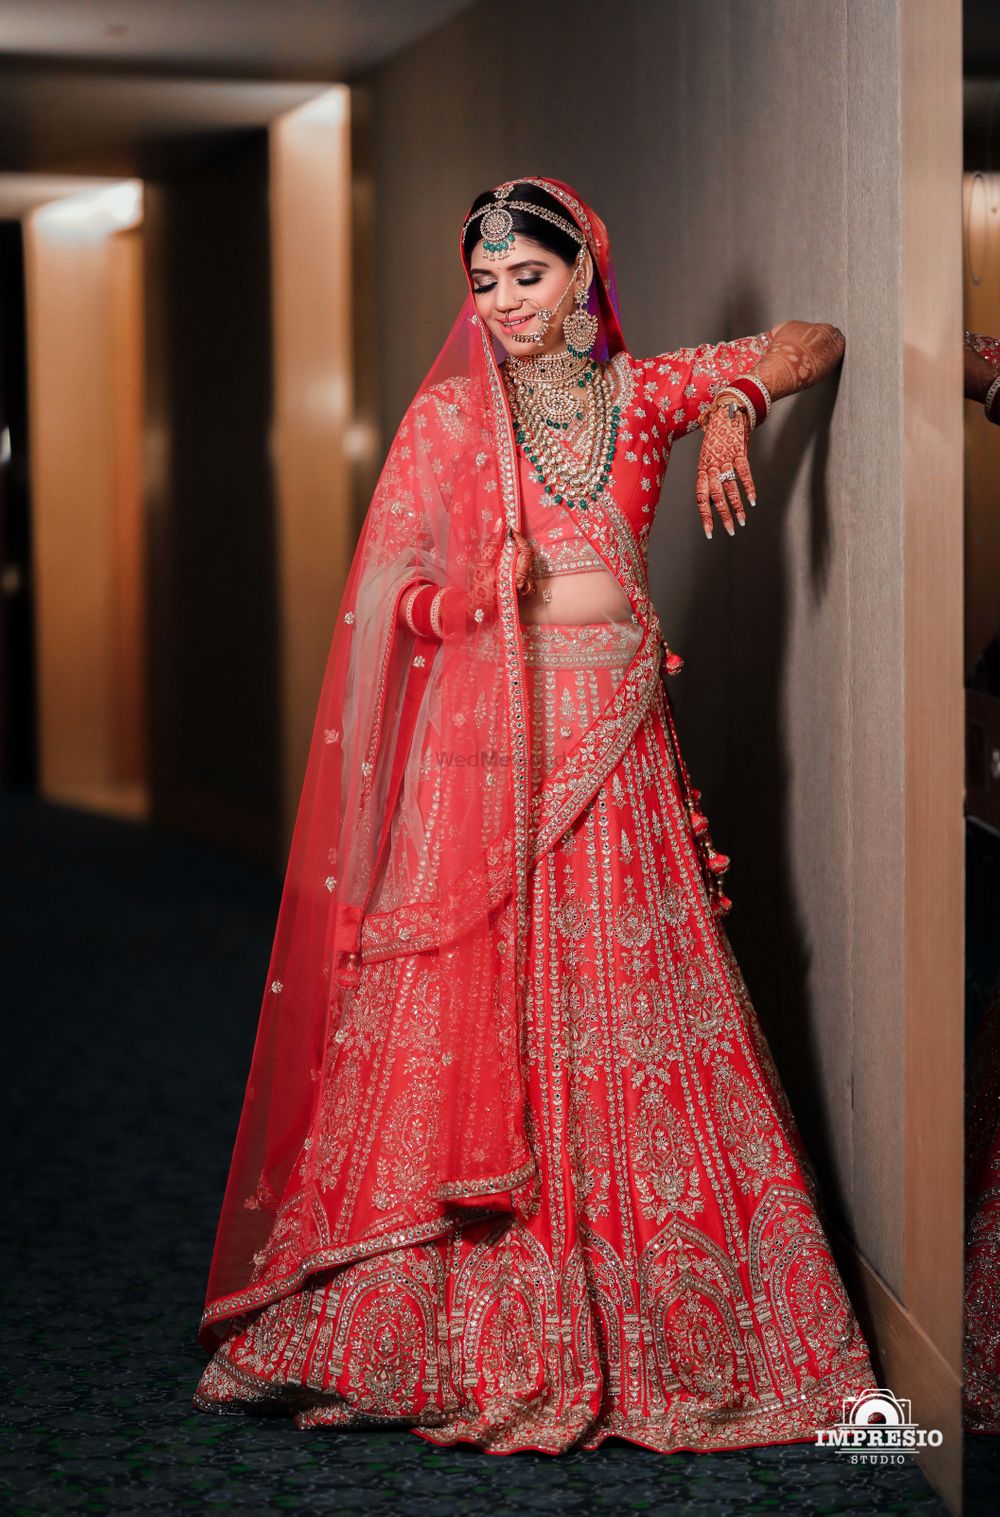 Photo From Vaibhav + Kriti Wedding - By Impresio Studio